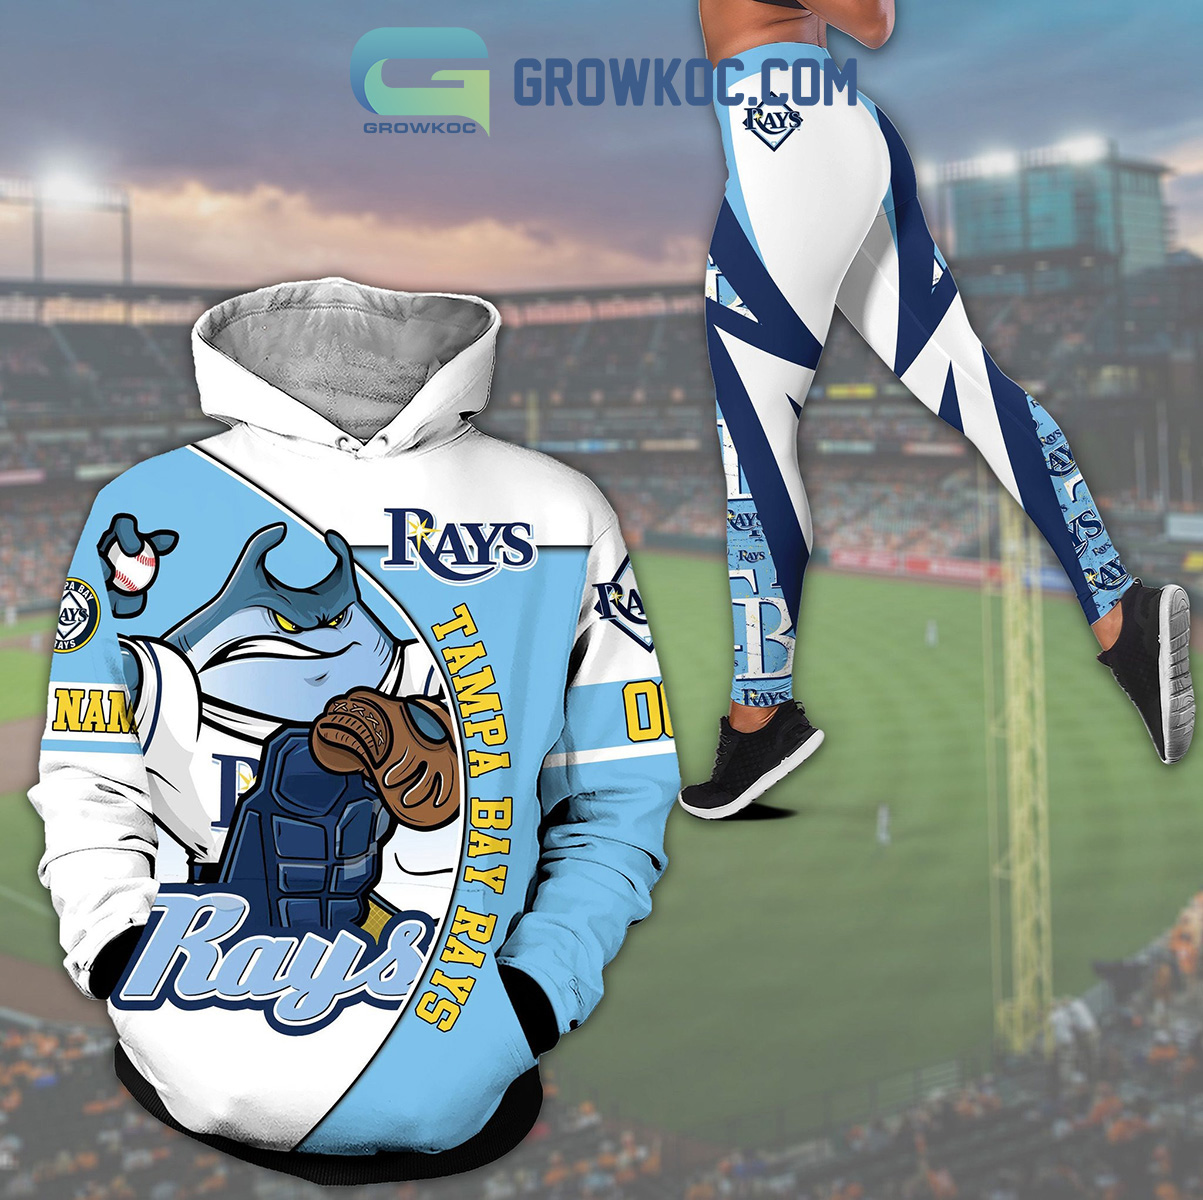 MLB Tampa Bay Rays Mix Jersey Personalized Style Polo Shirt - Growkoc